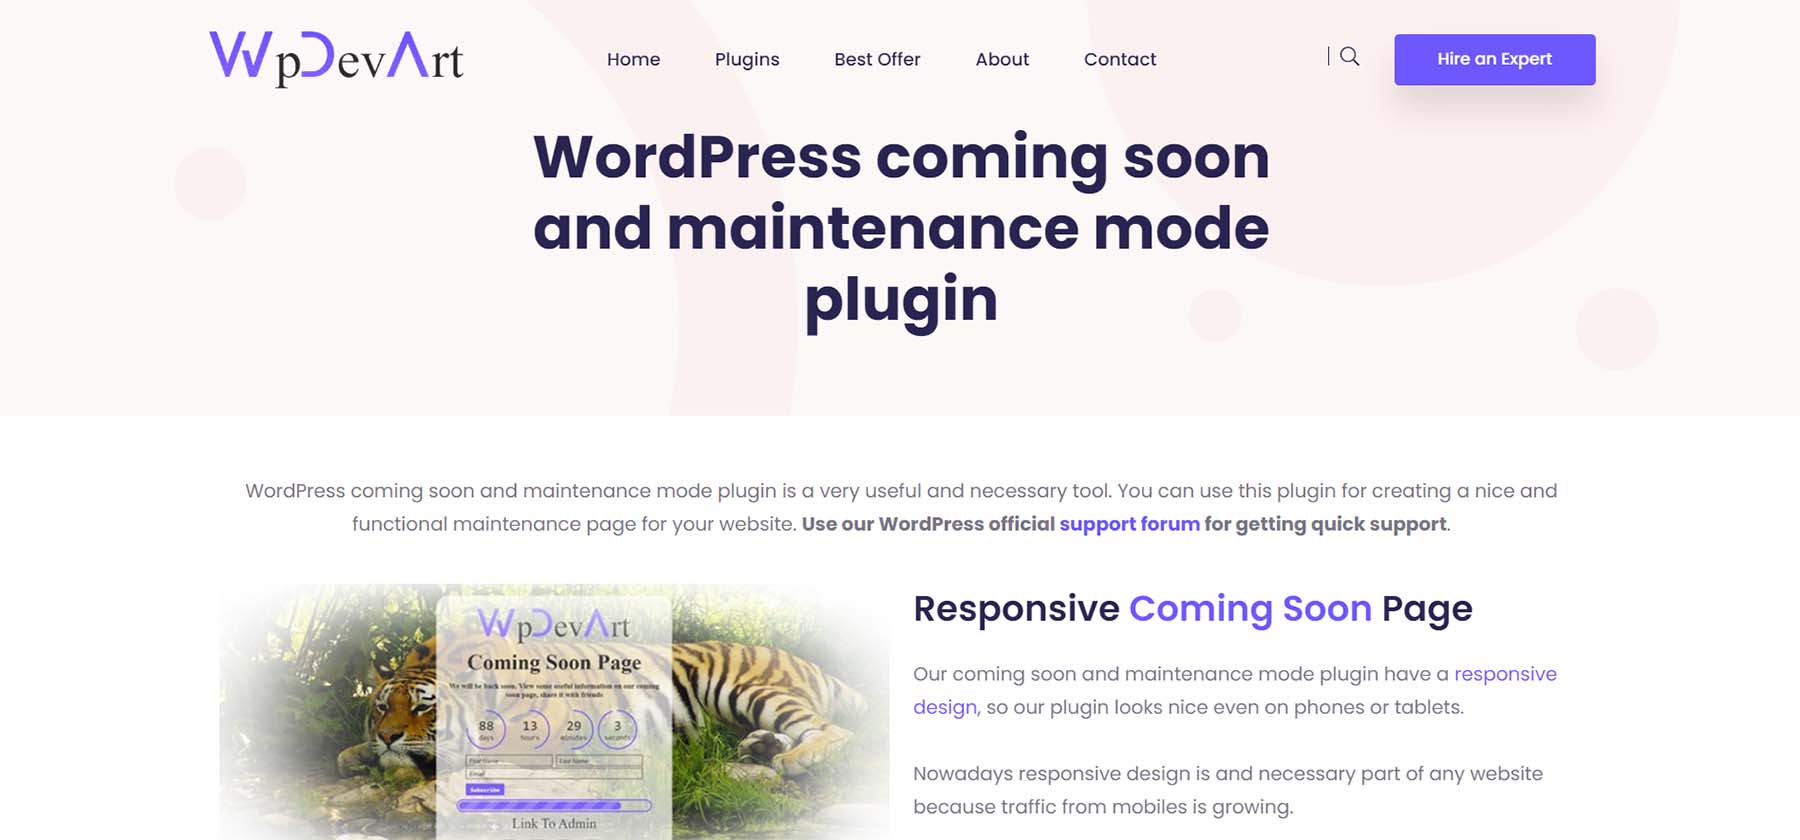 WP Dev Art WordPress coming soon and maintenance mode plugin